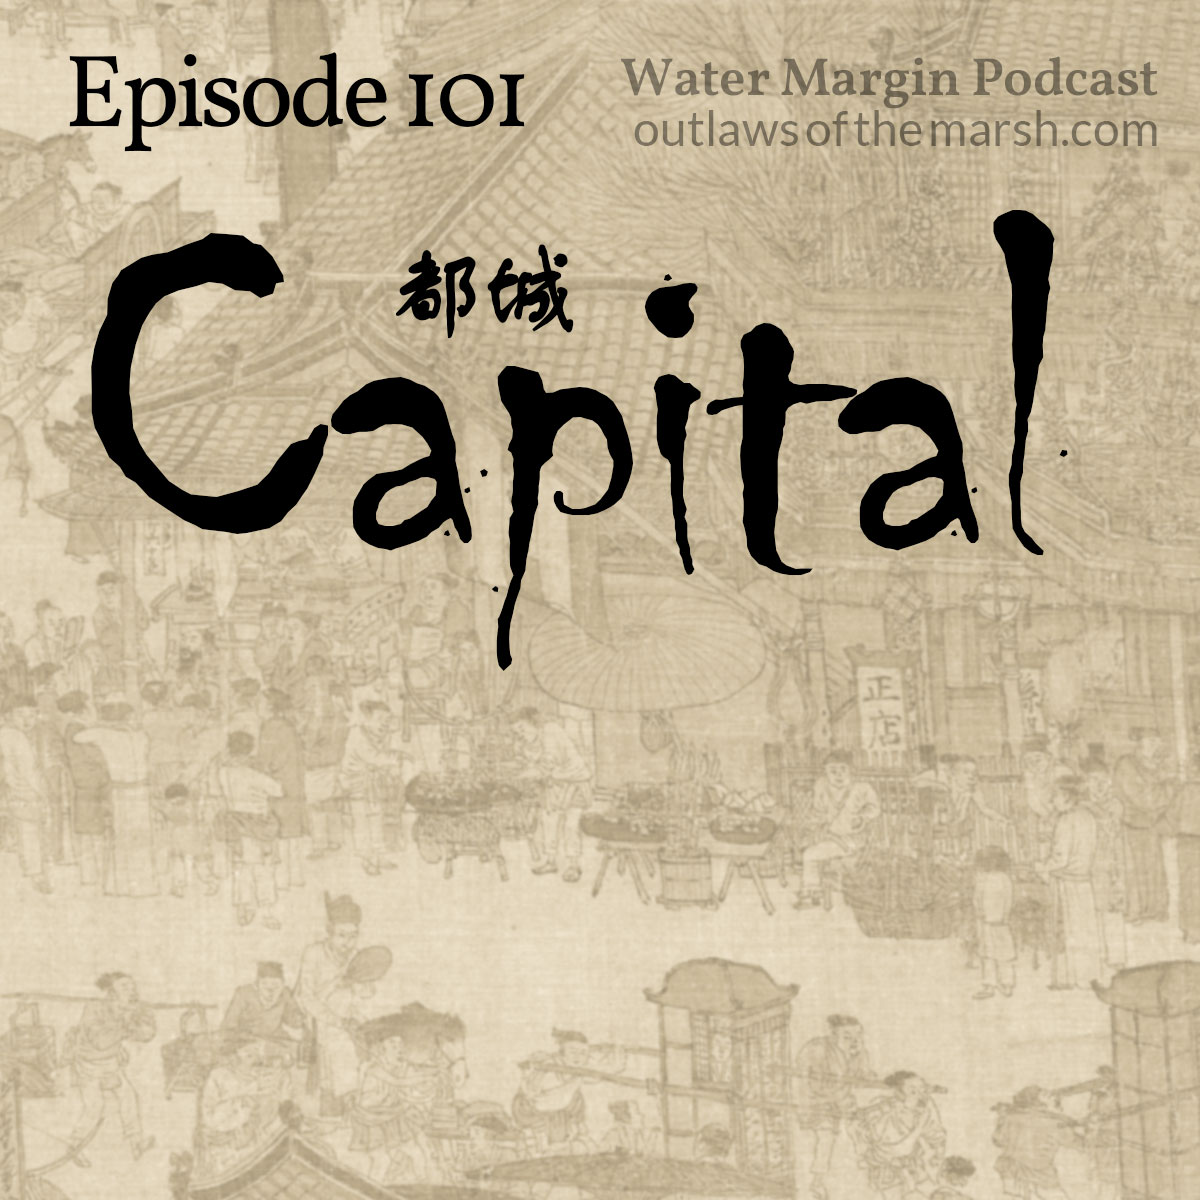 Water Margin Podcast: Episode 101